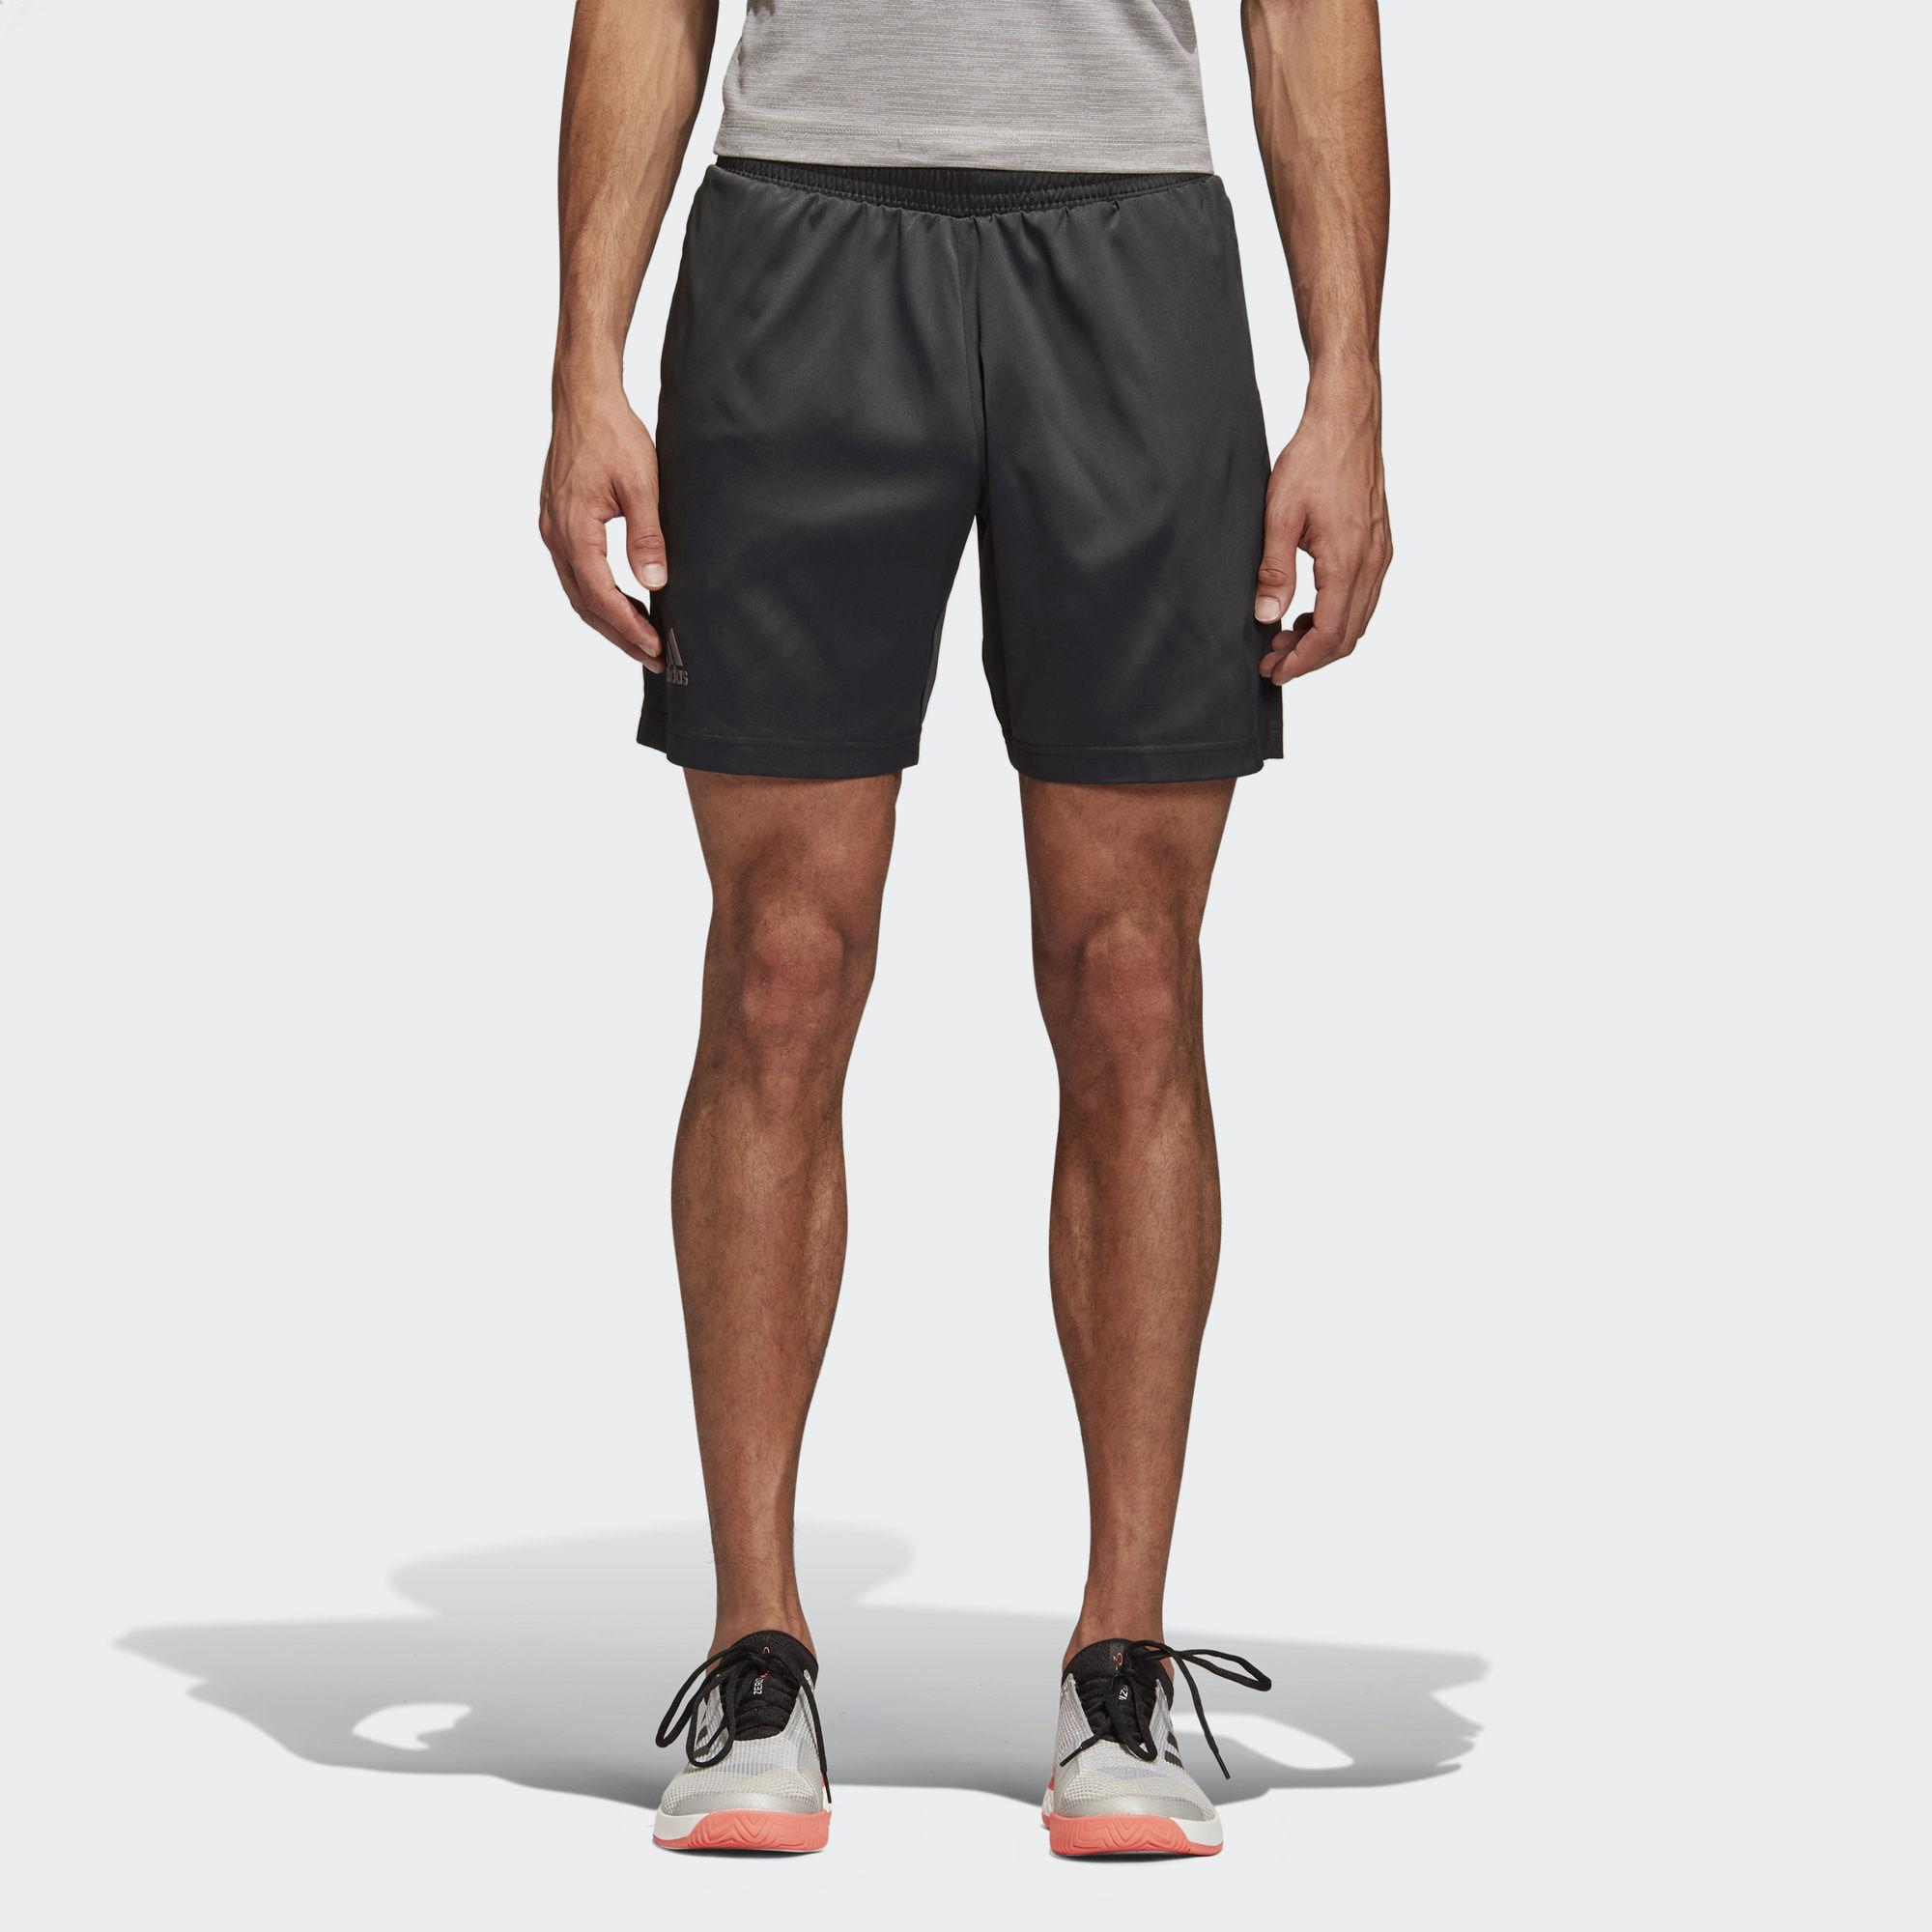 Adidas Mens MatchCode 7 Inch Shorts - Black - Tennisnuts.com